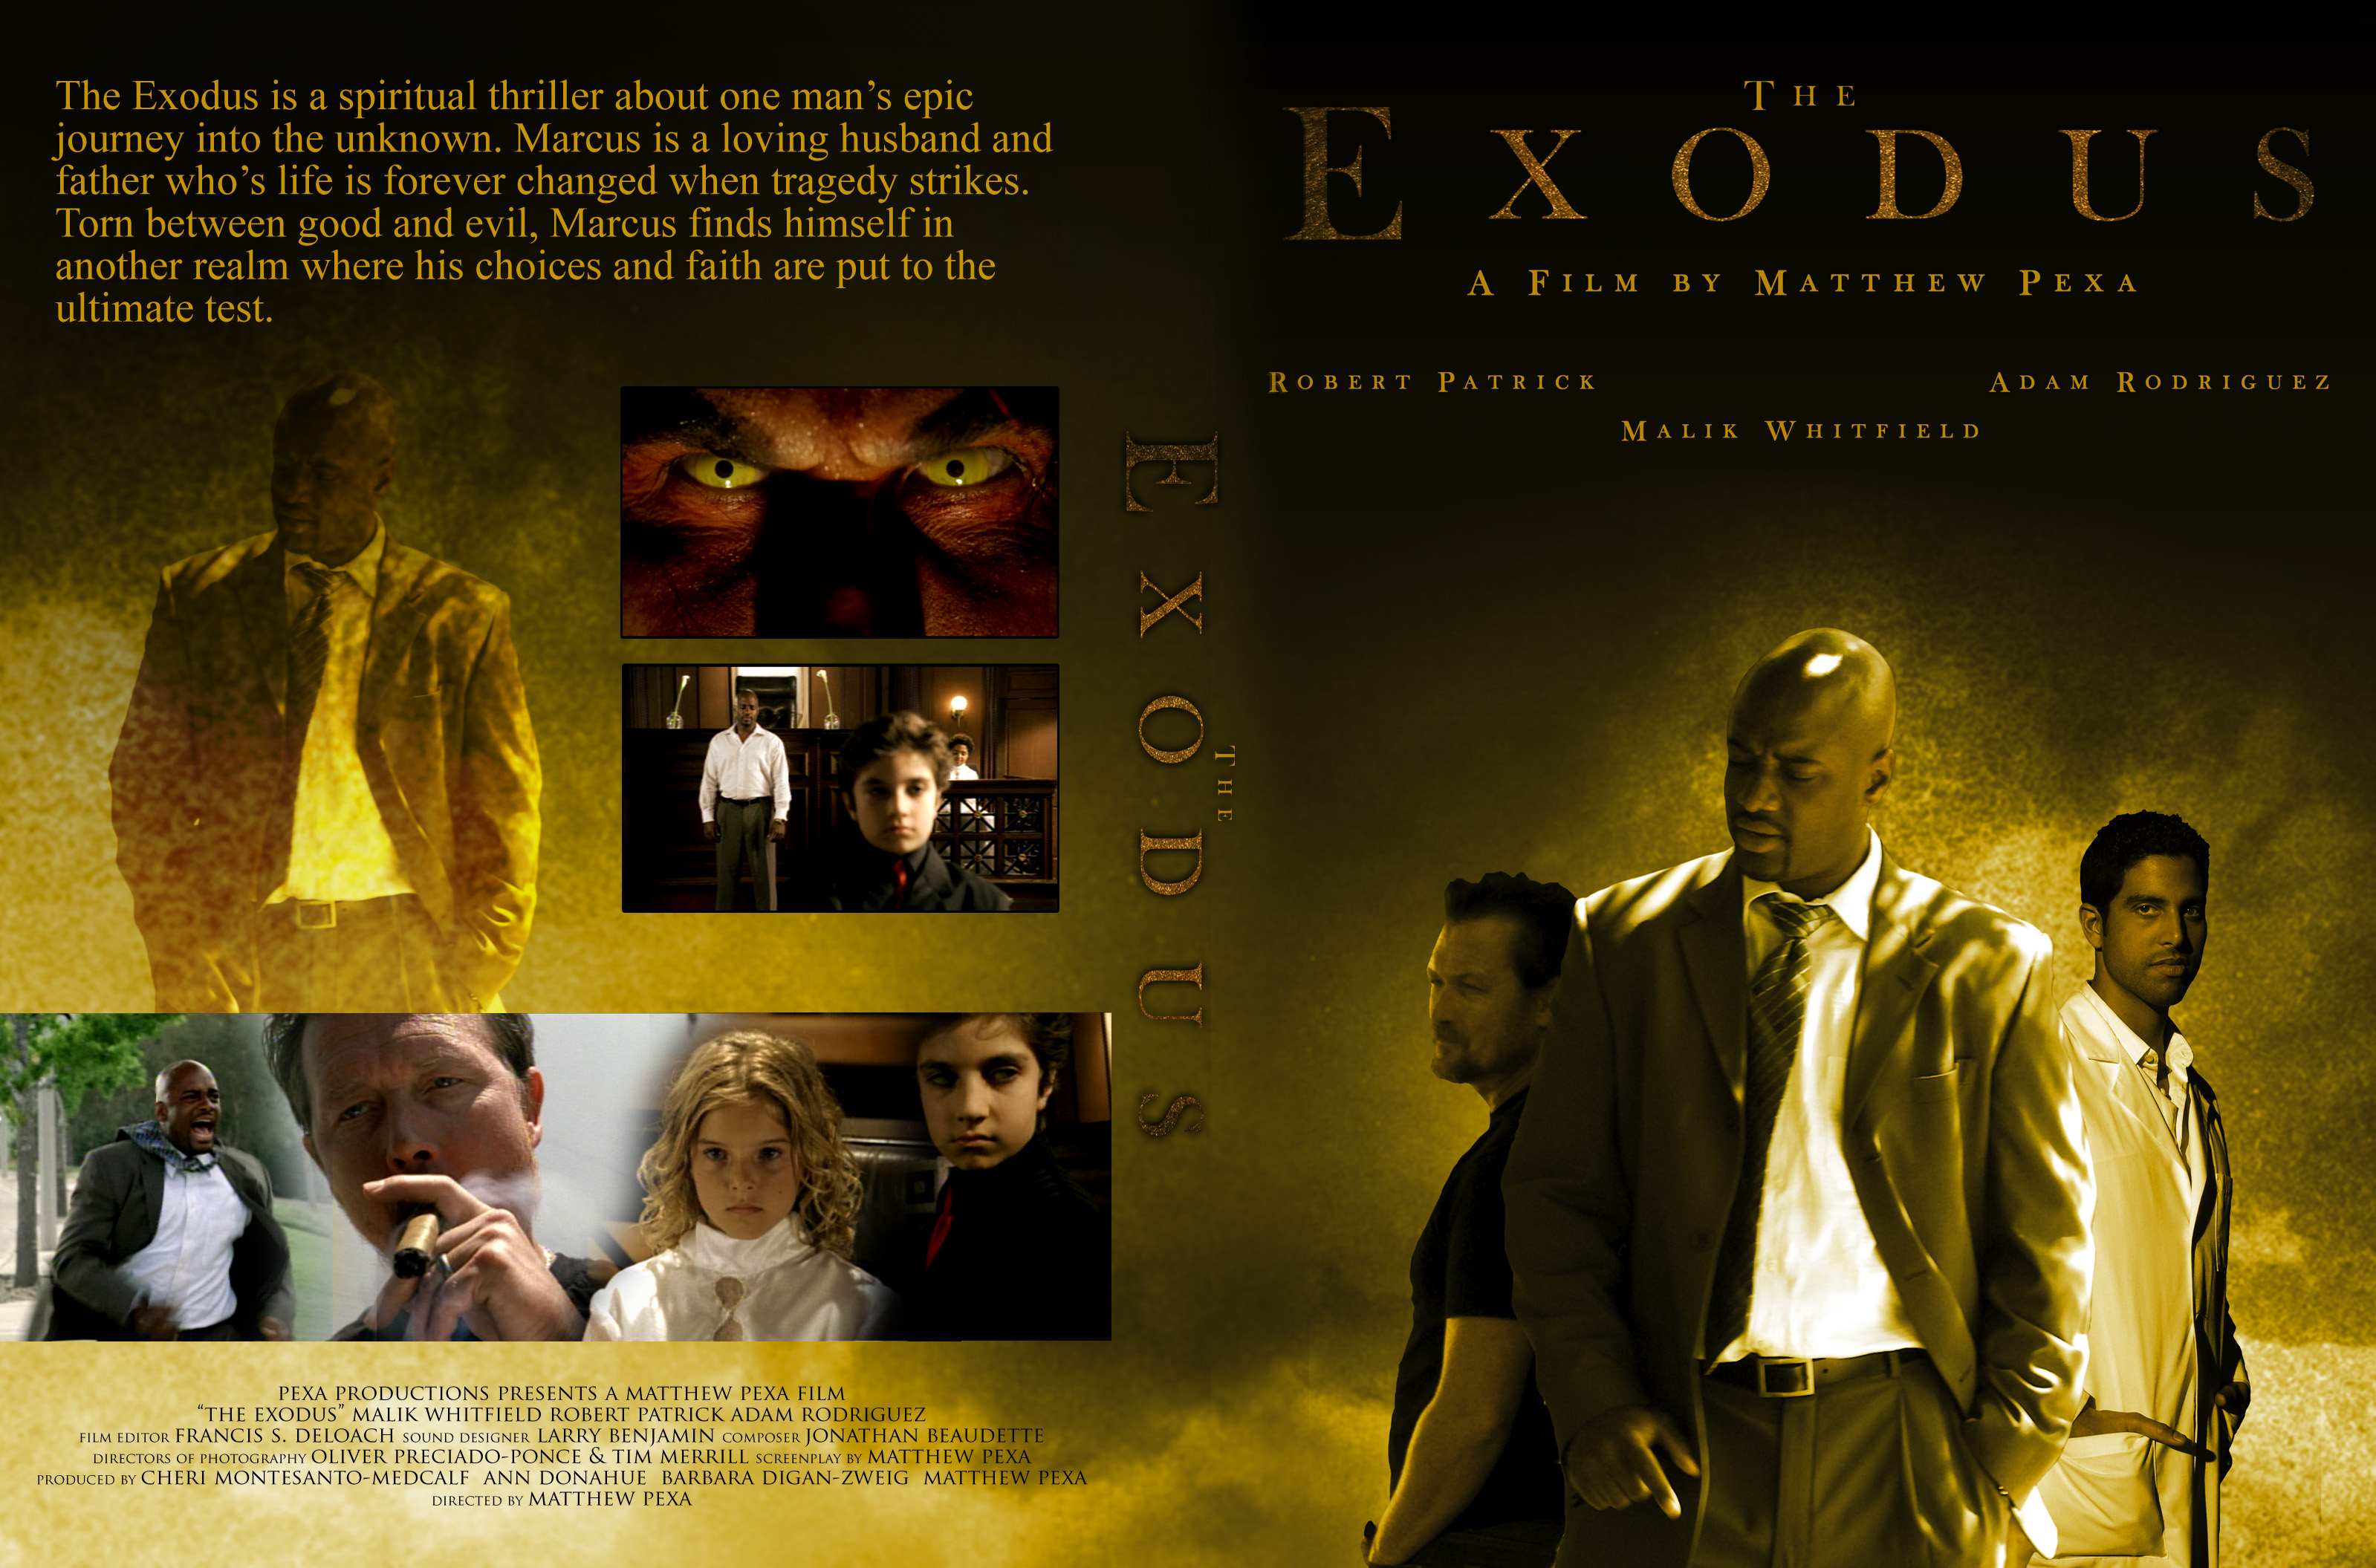 THE EXODUS Film POSTER: Variation #1